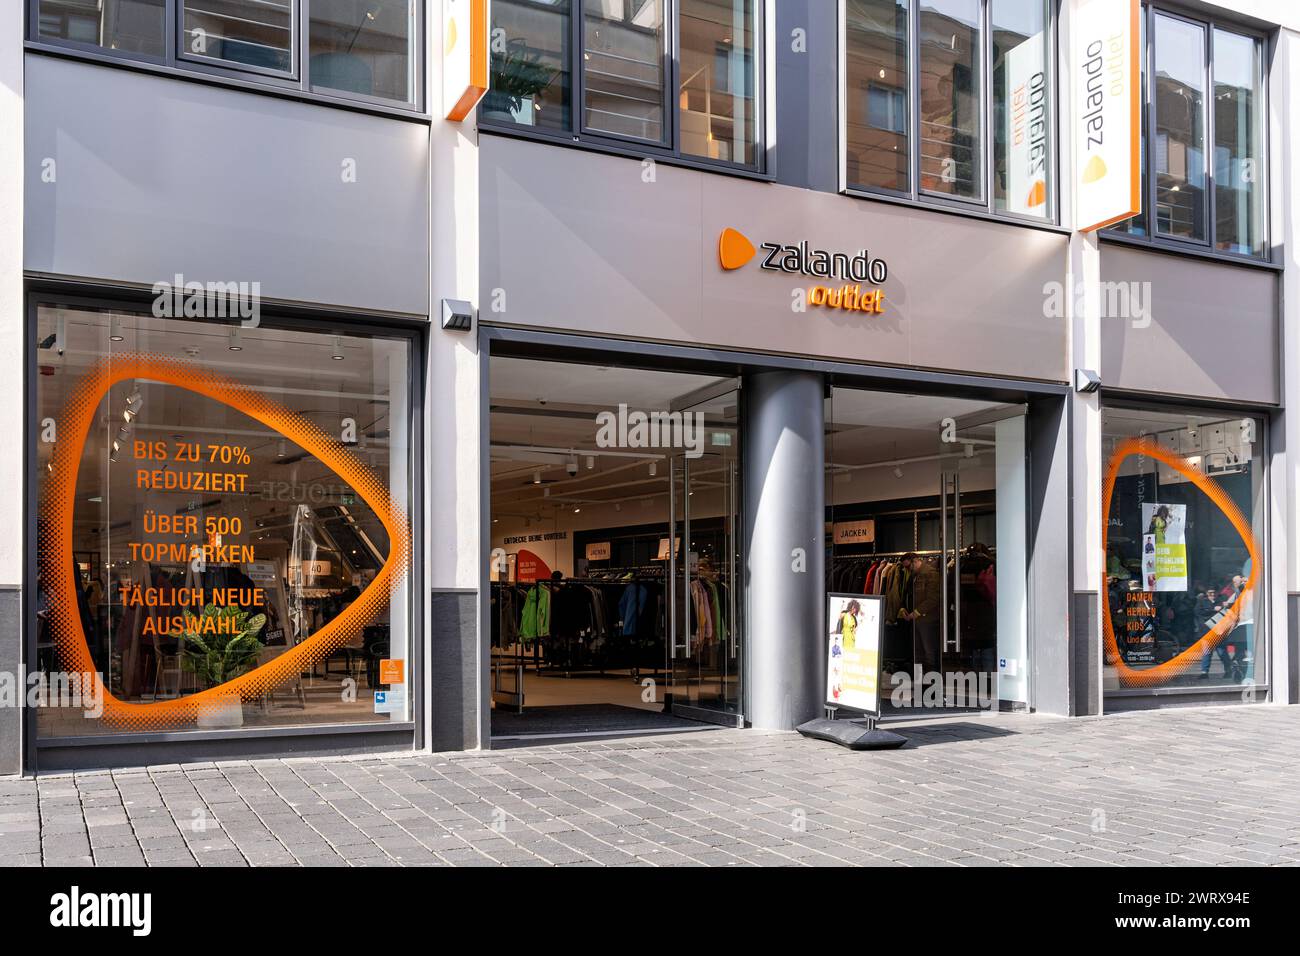 zalando outlet store in Bielefeld, Germany Stock Photo